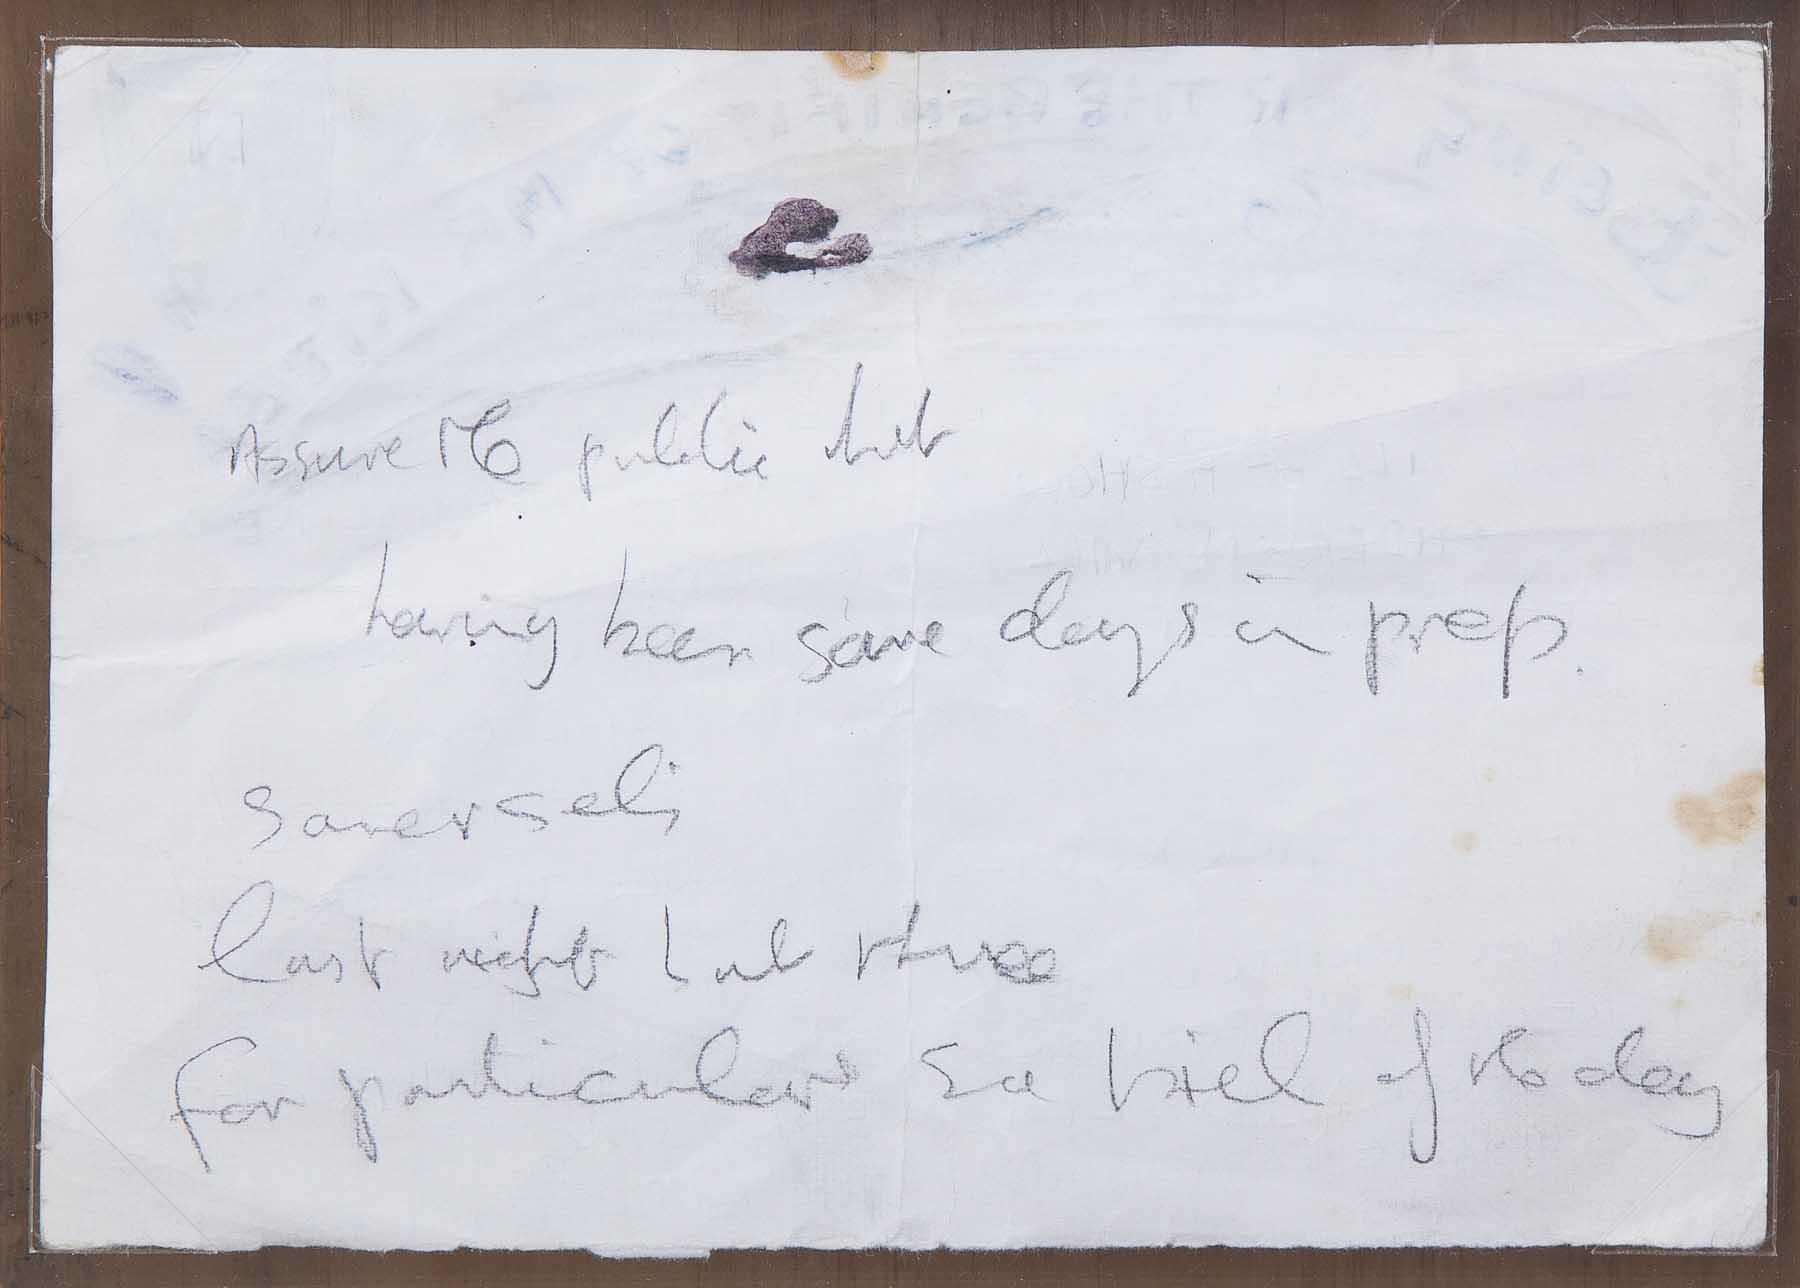 Manoscritto lirico di John Lennon (FOTO©Julien’s Auctions/IBERPRESS)